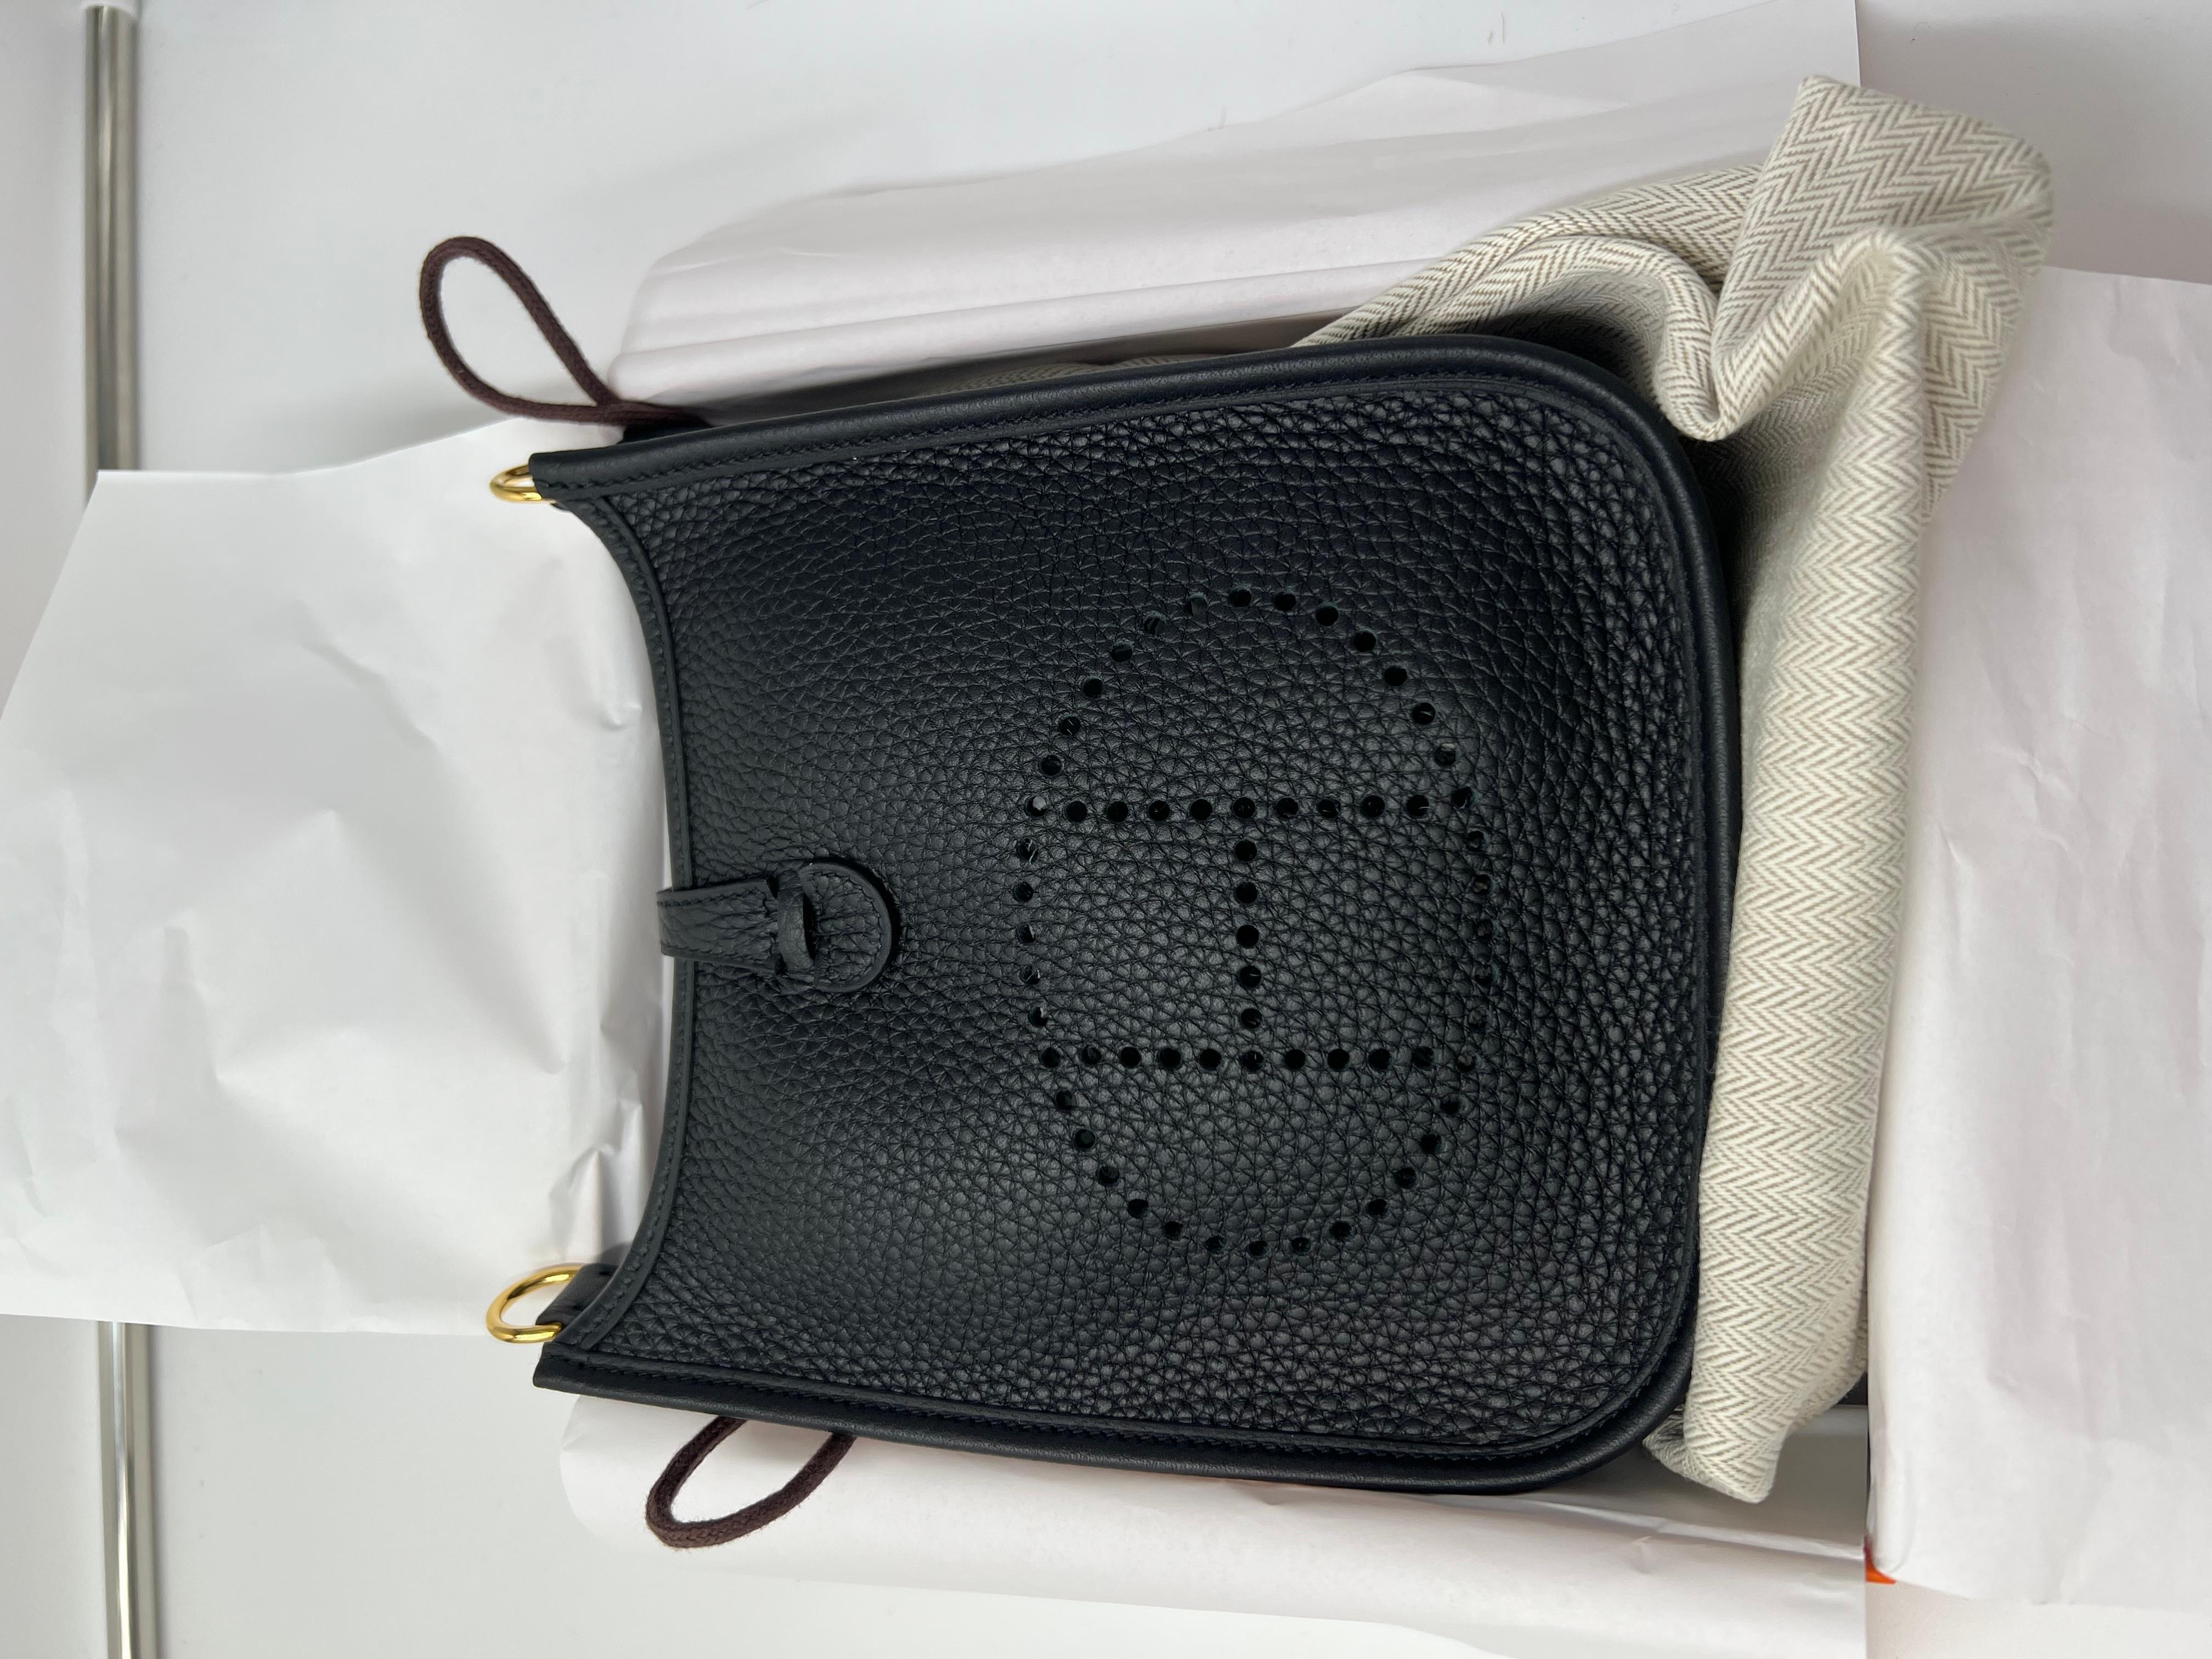 Hermes mini Evelyne 18 black togo bag with black strap and gold hardware. Comes full set